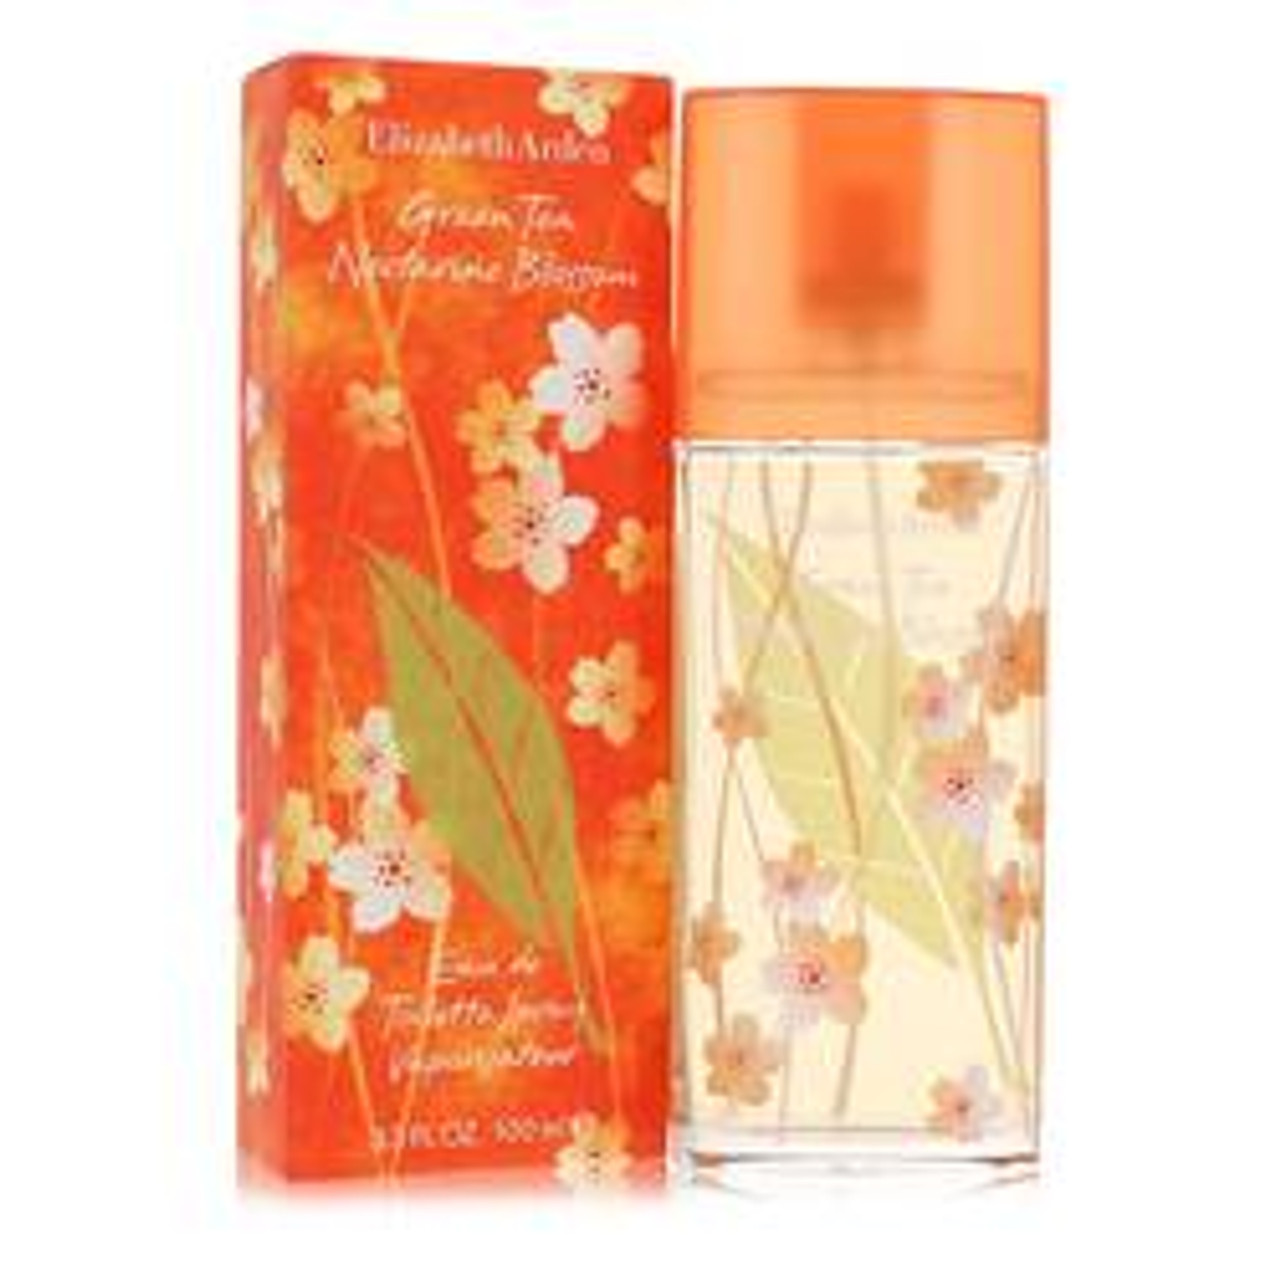 Green Tea Nectarine Blossom Perfume By Elizabeth Arden Eau De Toilette Spray 3.3 oz for Women - [From 31.00 - Choose pk Qty ] - *Ships from Miami